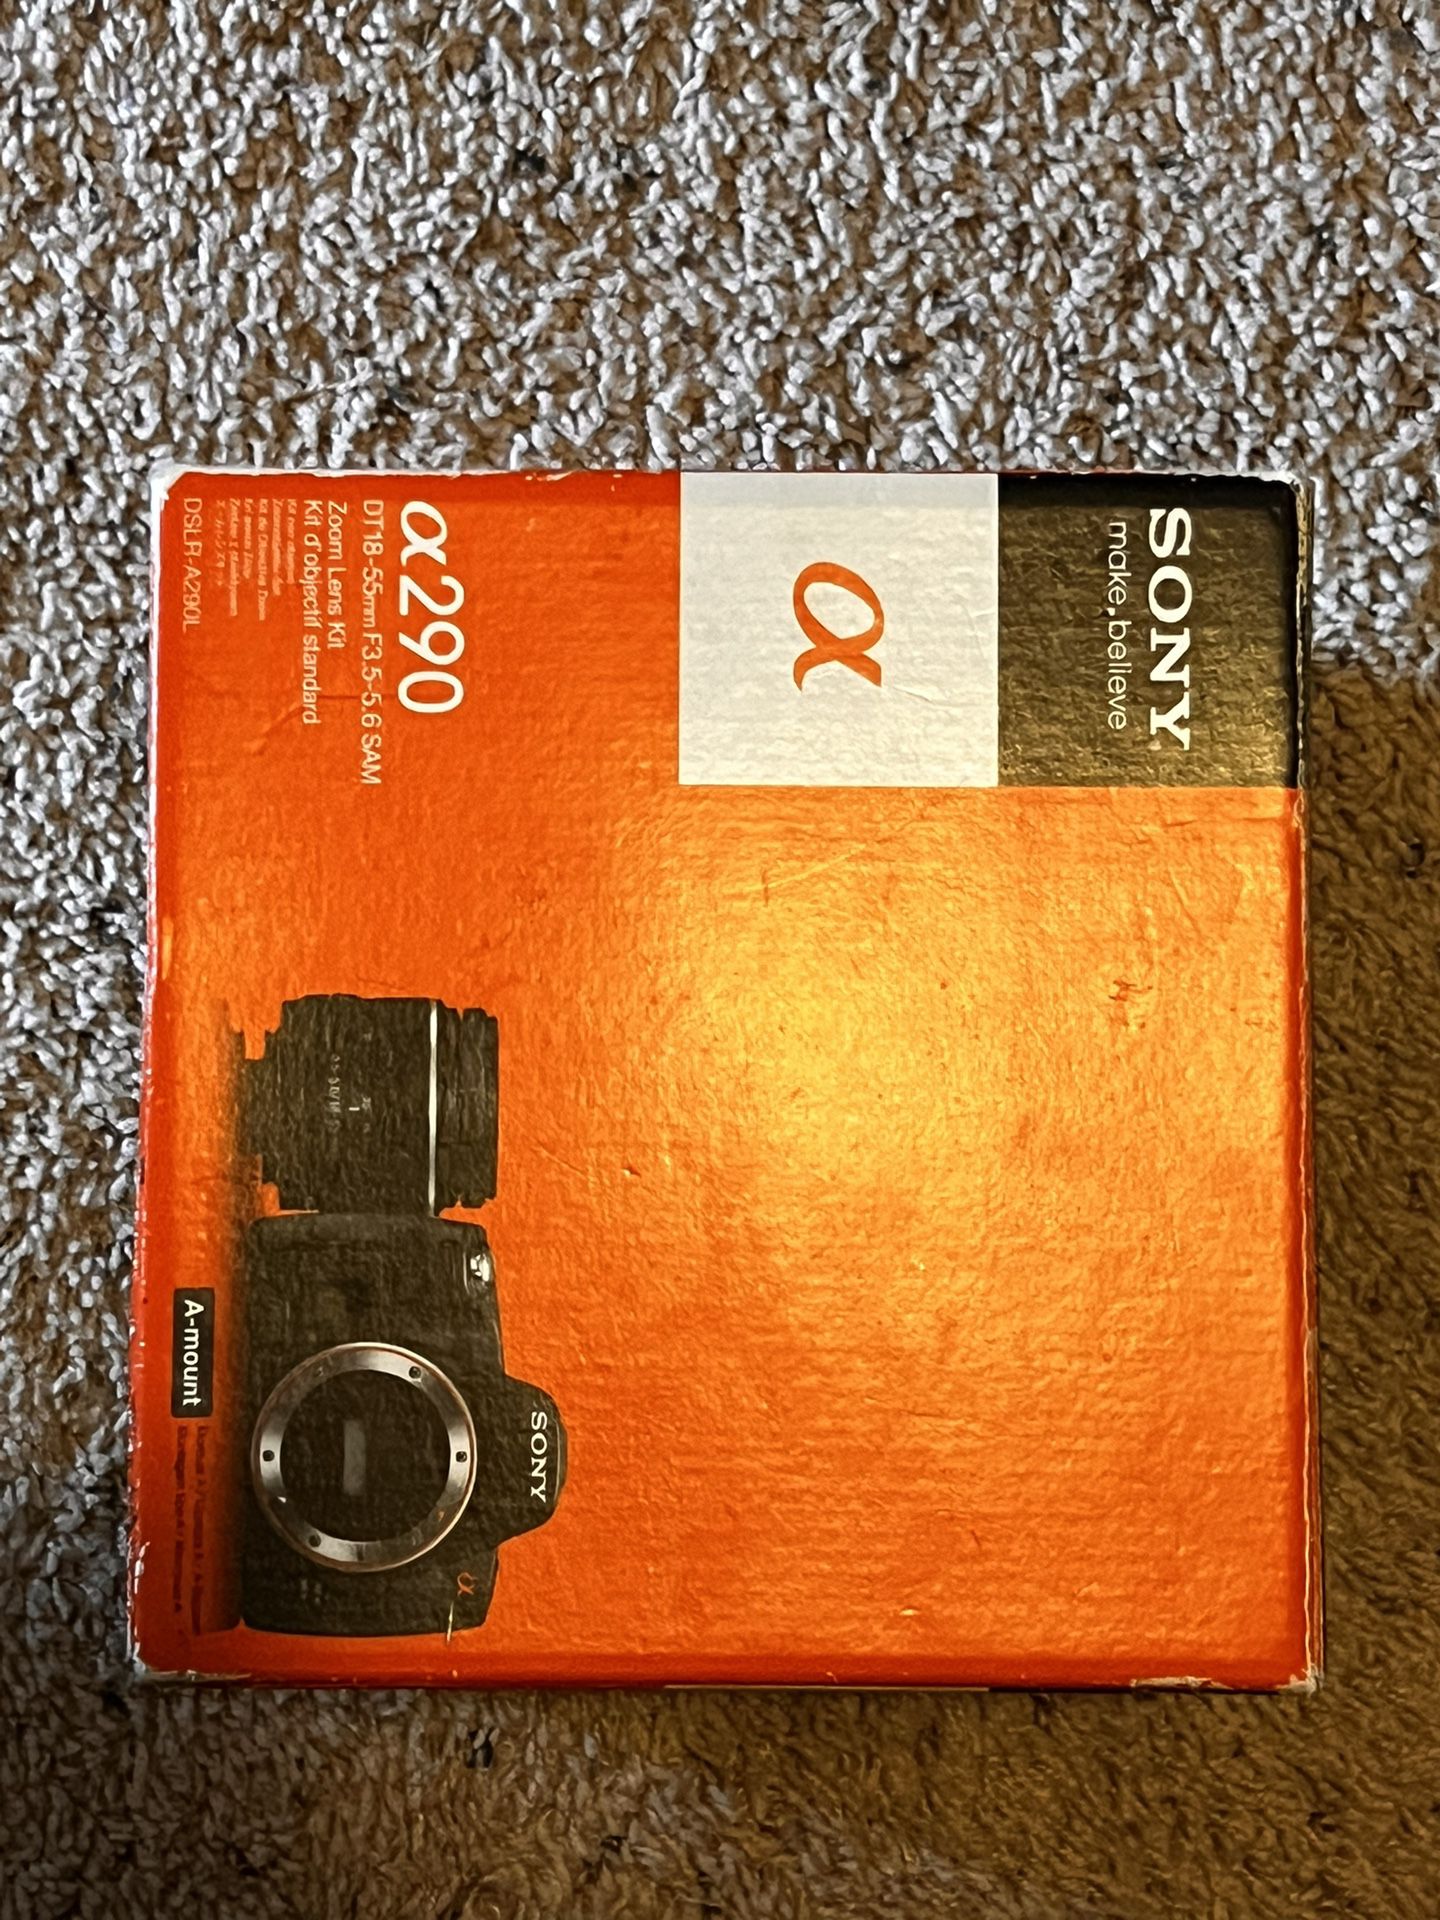 Sony a290 Digital Camera